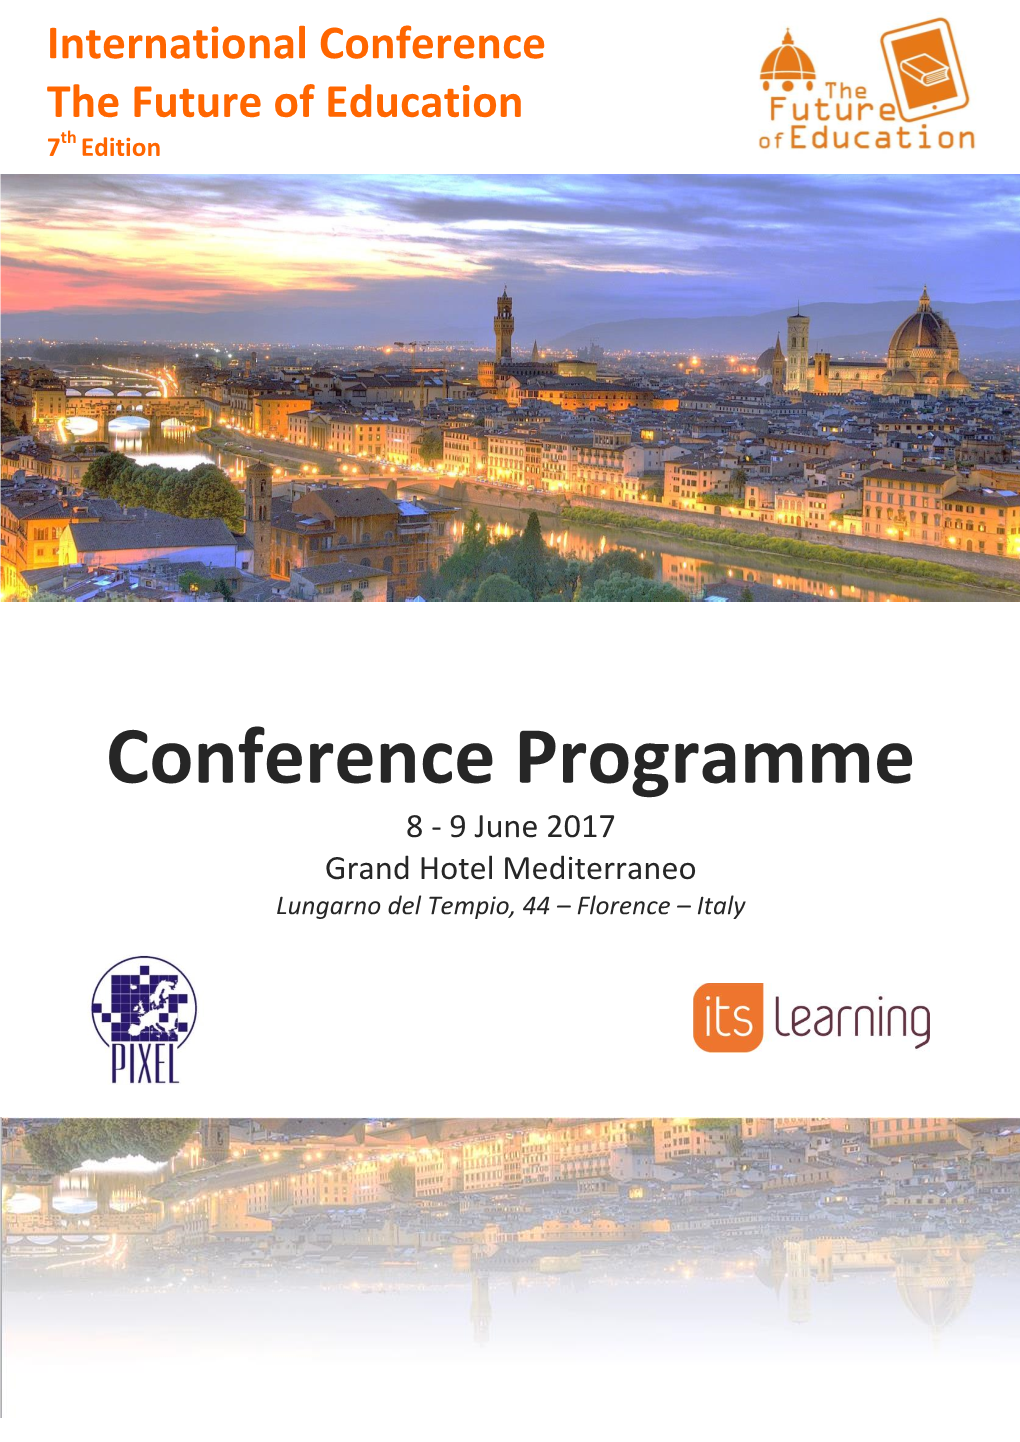 Conference Programme 8 - 9 June 2017 Grand Hotel Mediterraneo Lungarno Del Tempio, 44 – Florence – Italy